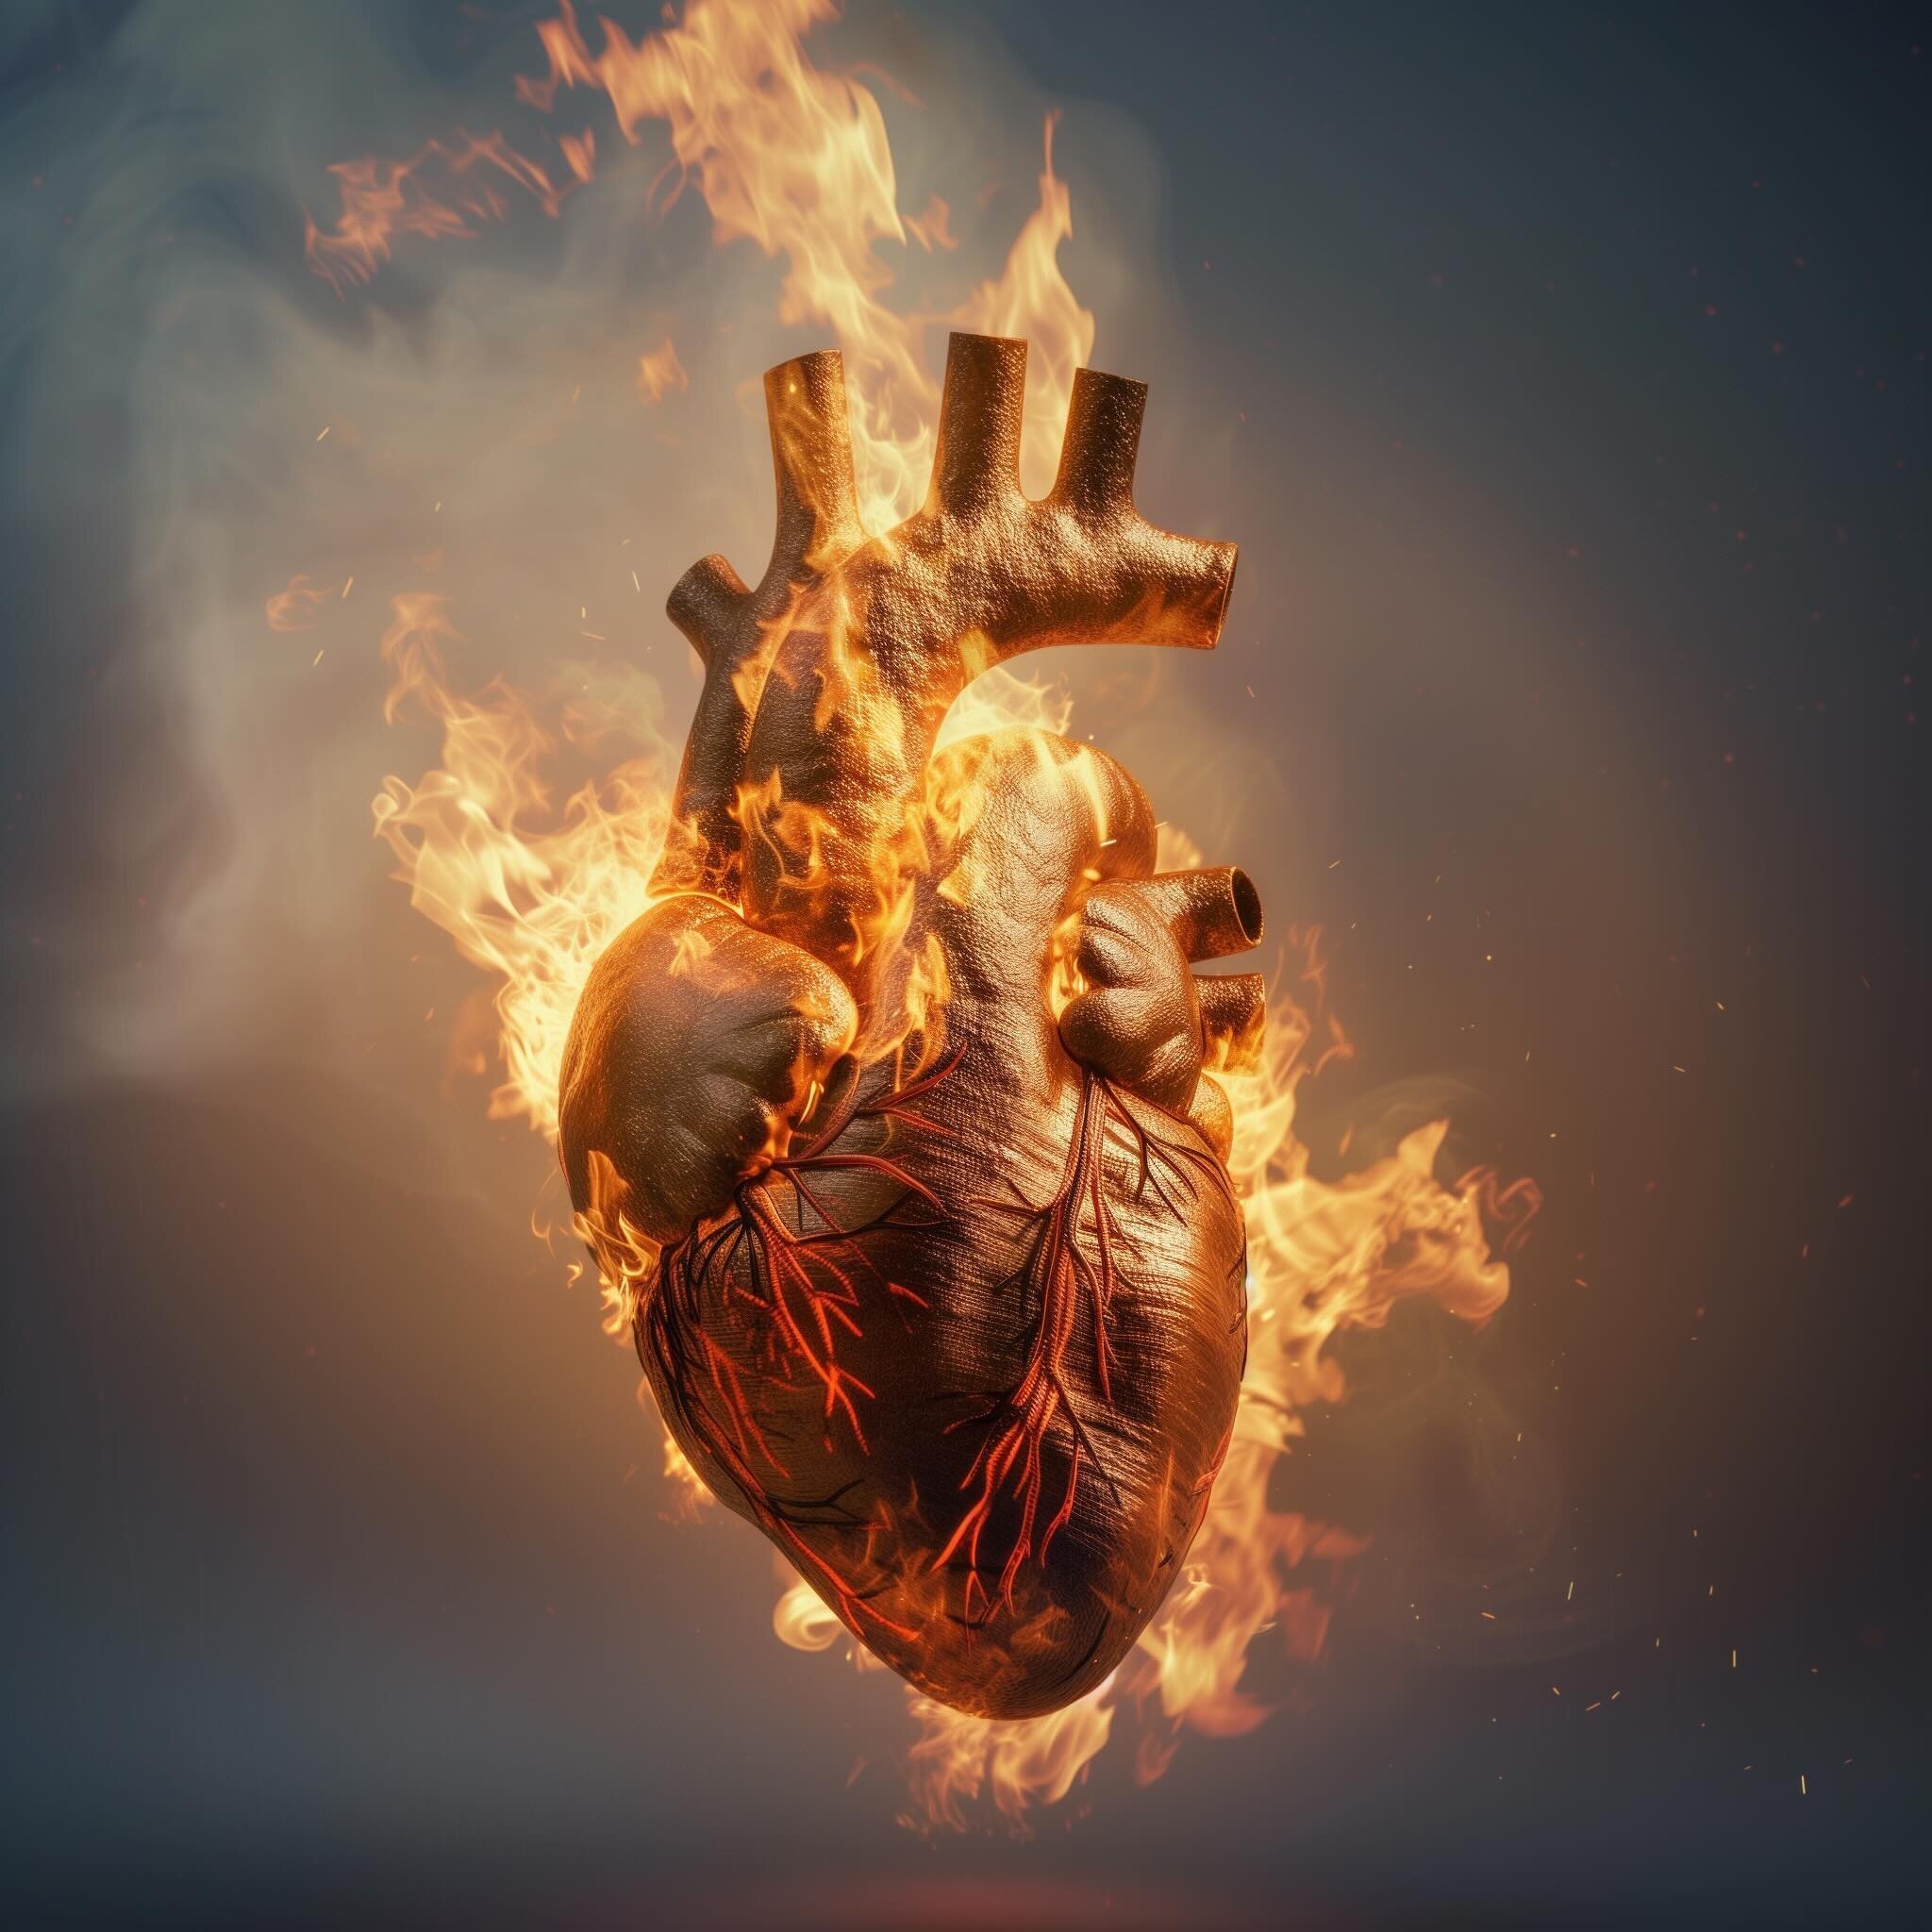 Heart on fire

Made with MidJourney v6

#aiart #aigeneratedart #generativeart #digitalart #art #aiartcommunity #midjourney #midjourneyai #midjourneyv6 #heart #hearts #heartsonfire #valentines